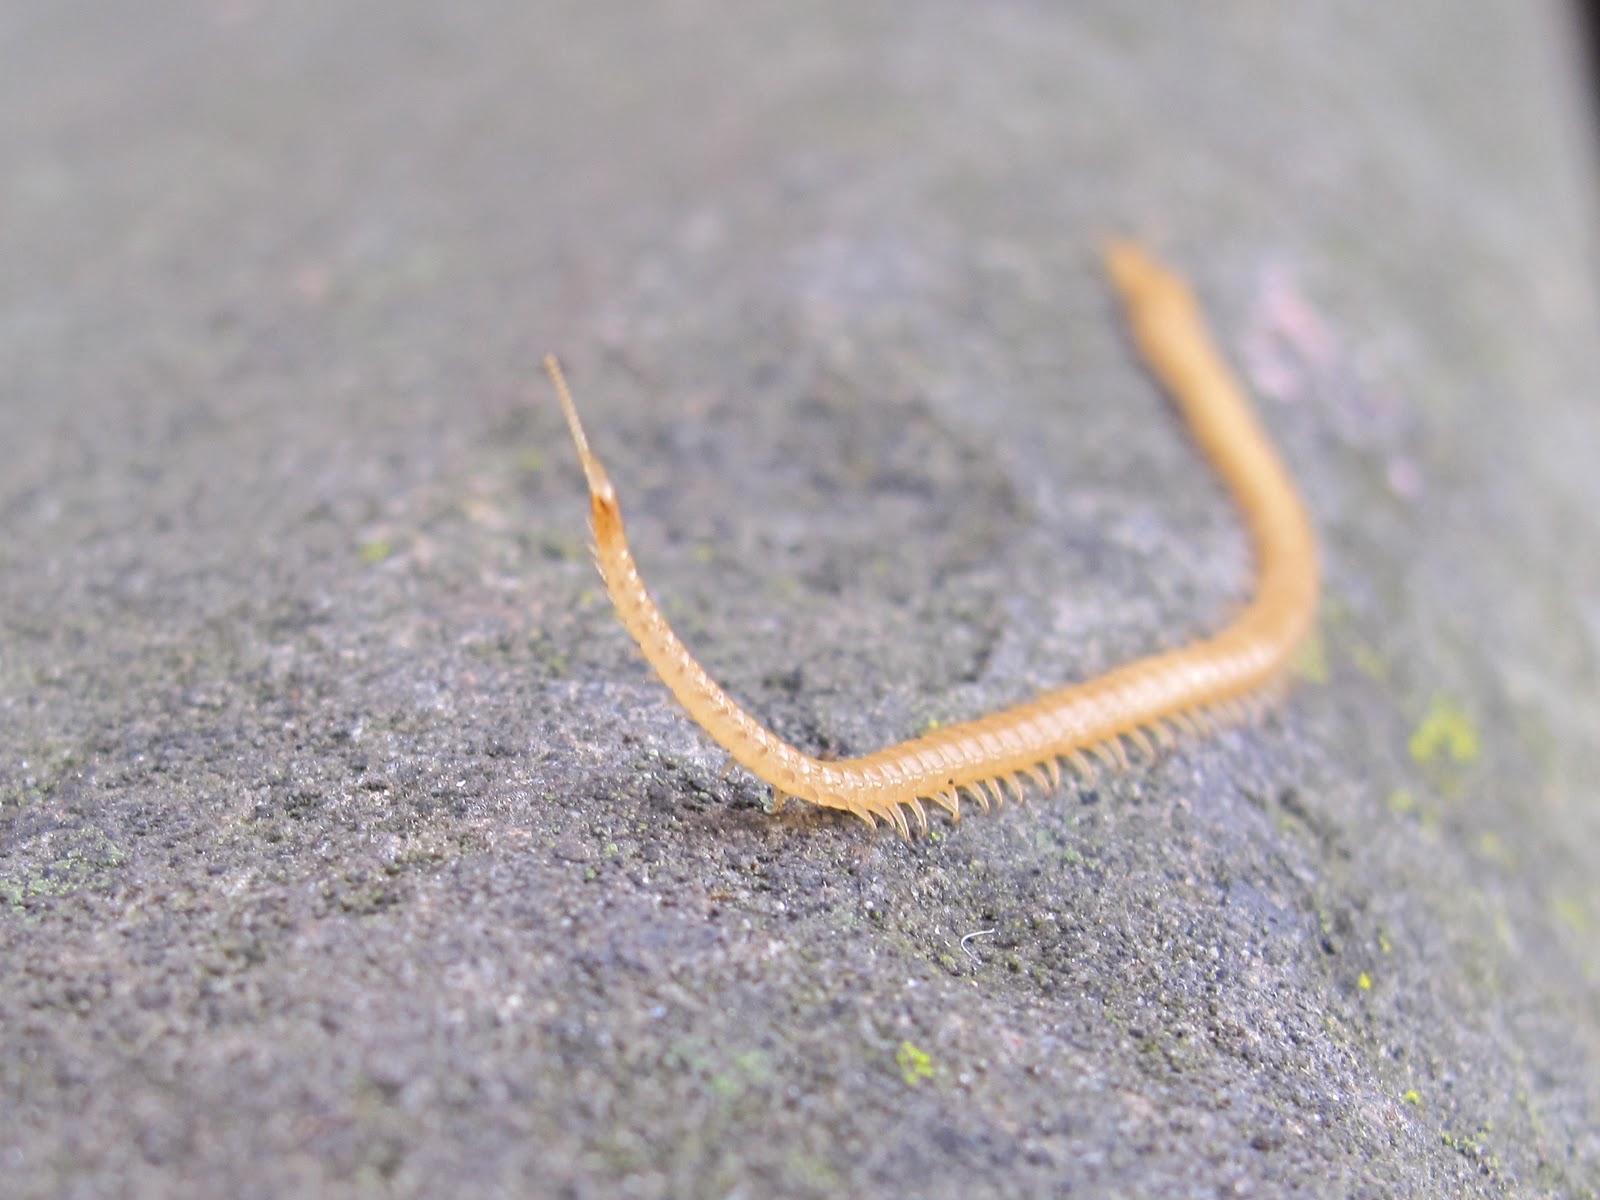 BugBlog Centipede on a walkabout